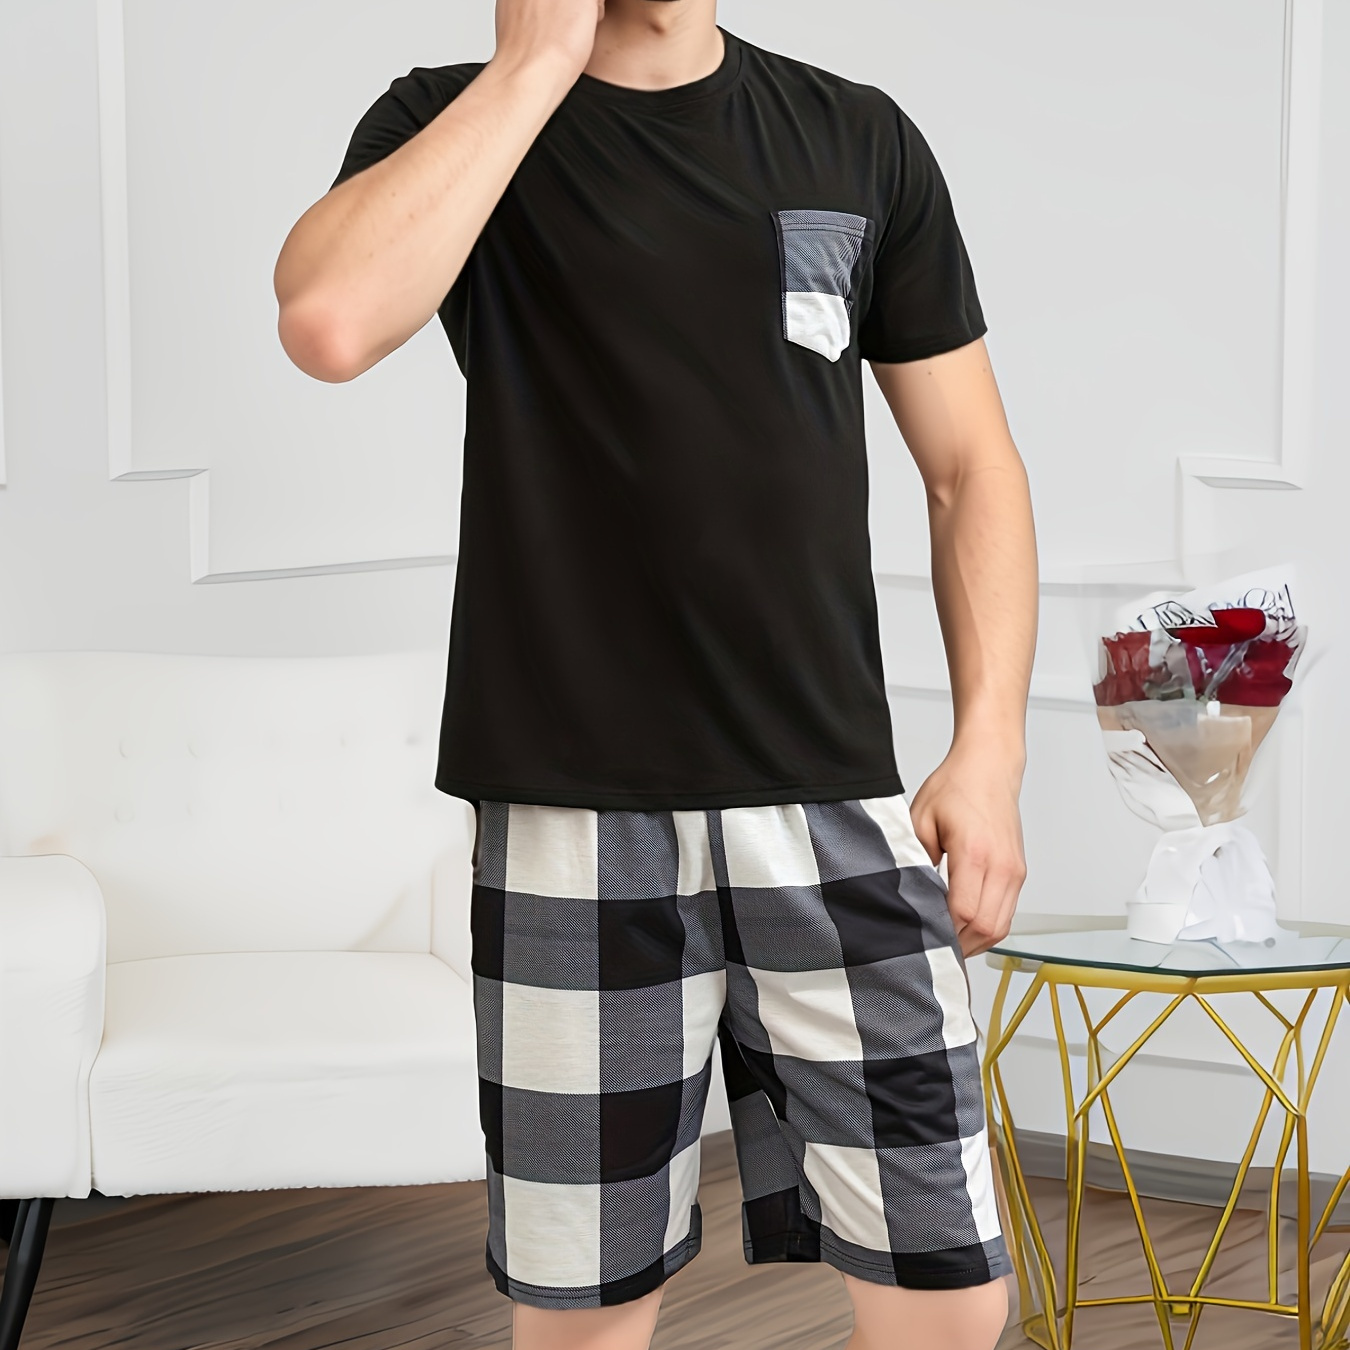 

2 Pcs Men's Cool Short T-shirts With Pocket & Plaid Shorts Pajama Sets, Comfortable & Skin-friendly Style Pajamas For Men's Cozy Loungewear